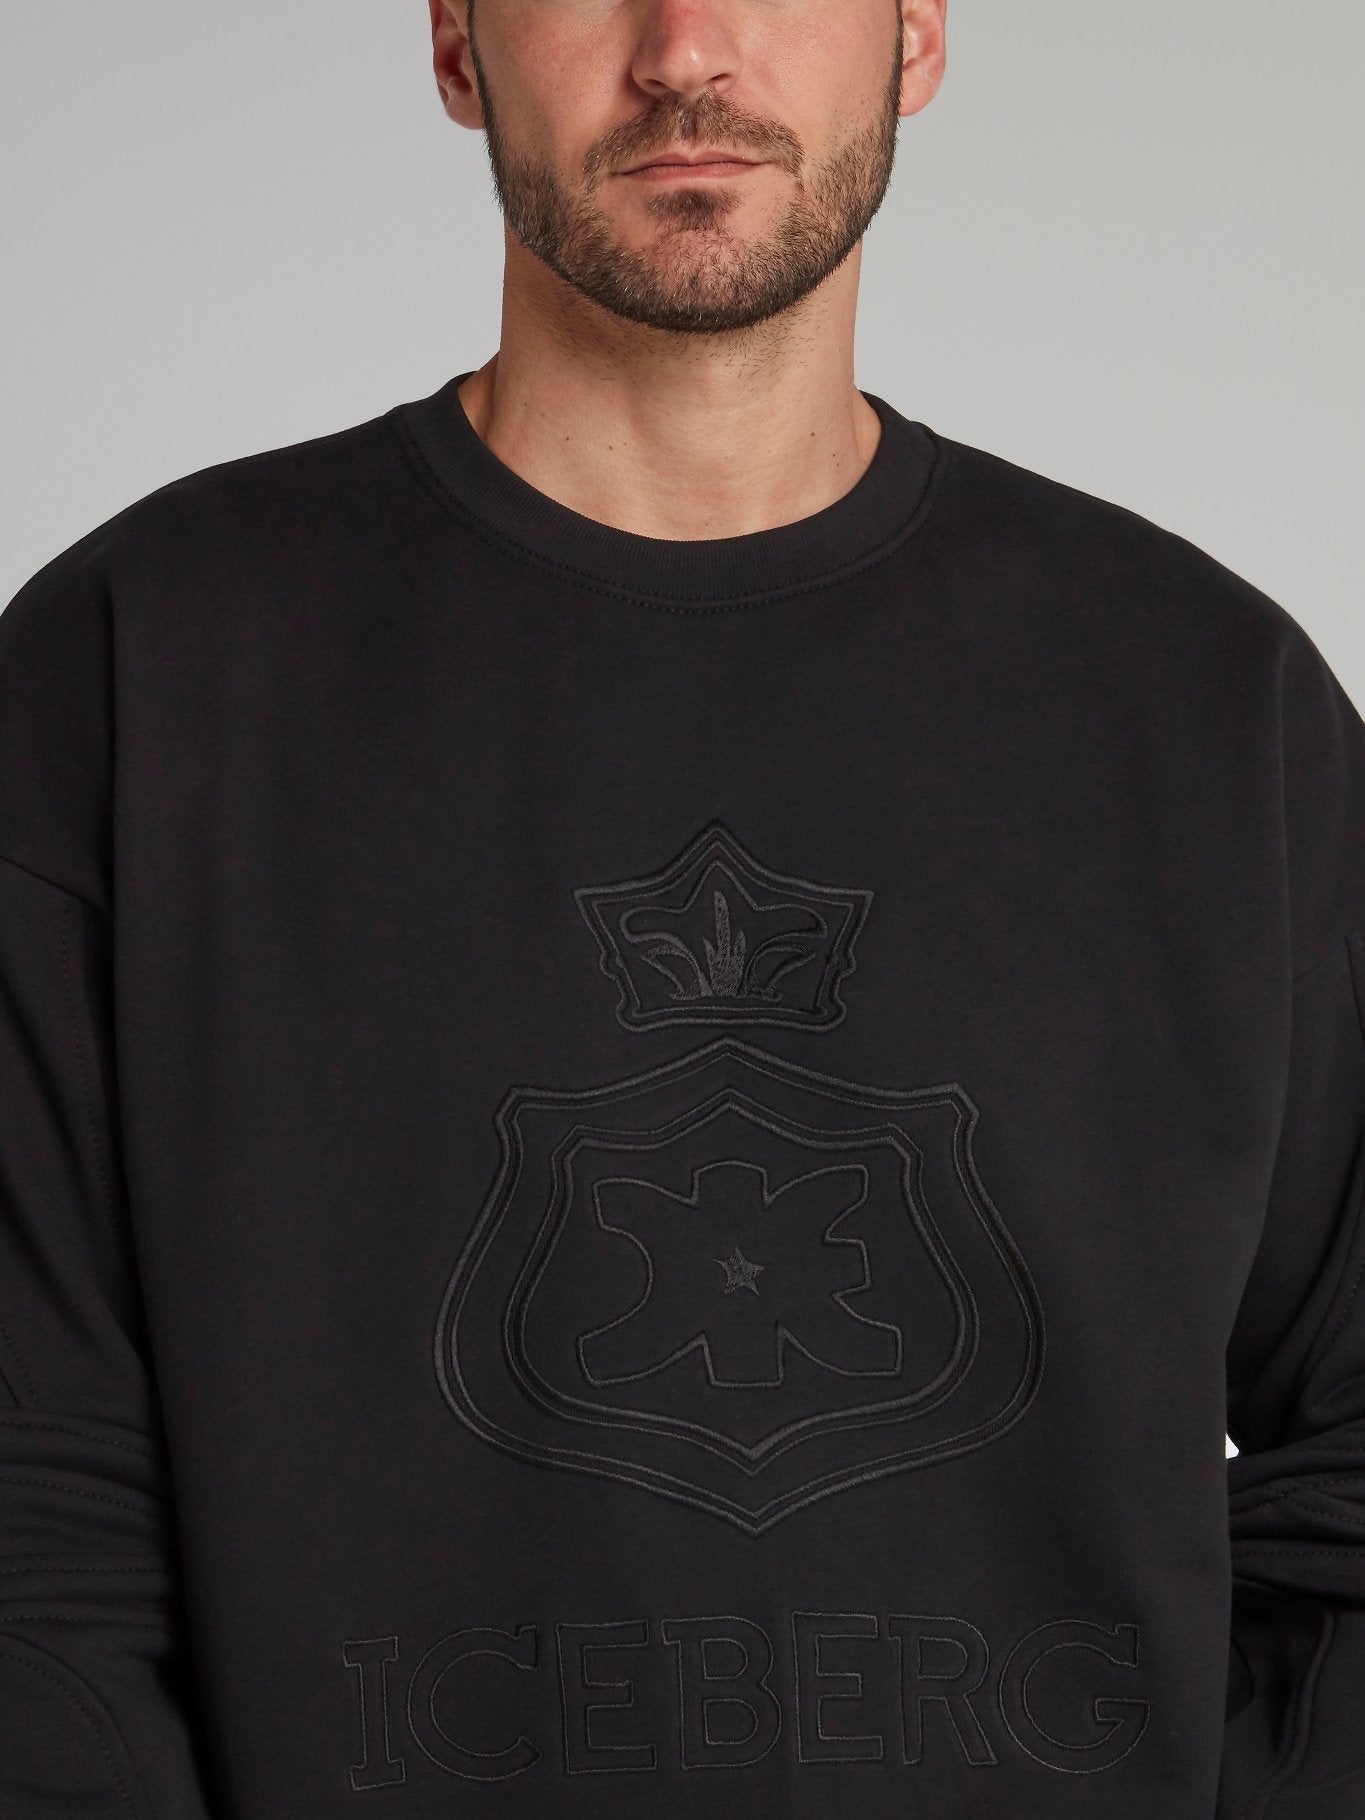 Black Embroidered Monogram Sweatshirt